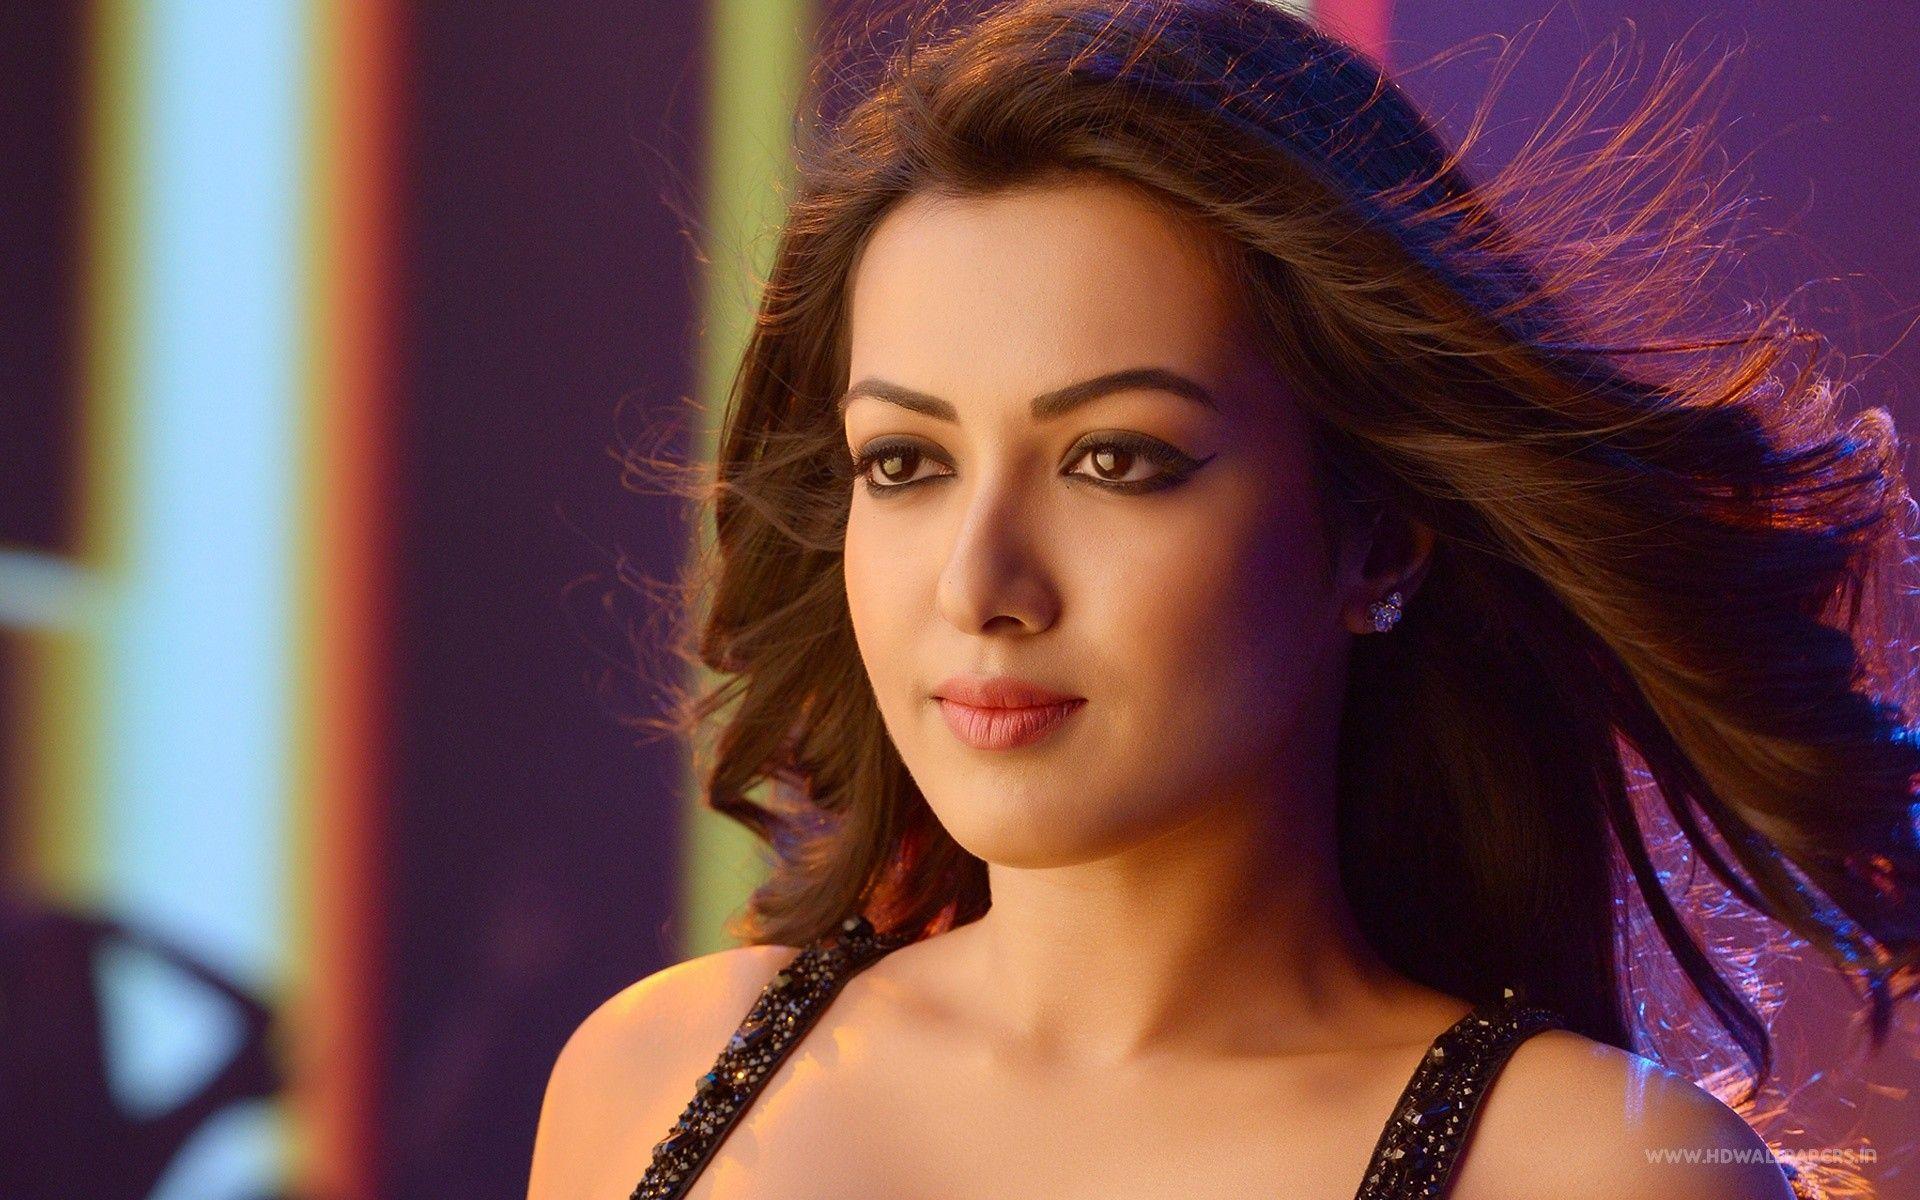 Bollywood Actress Pic Hd Download Bollywood Actress Hd Wallpapers